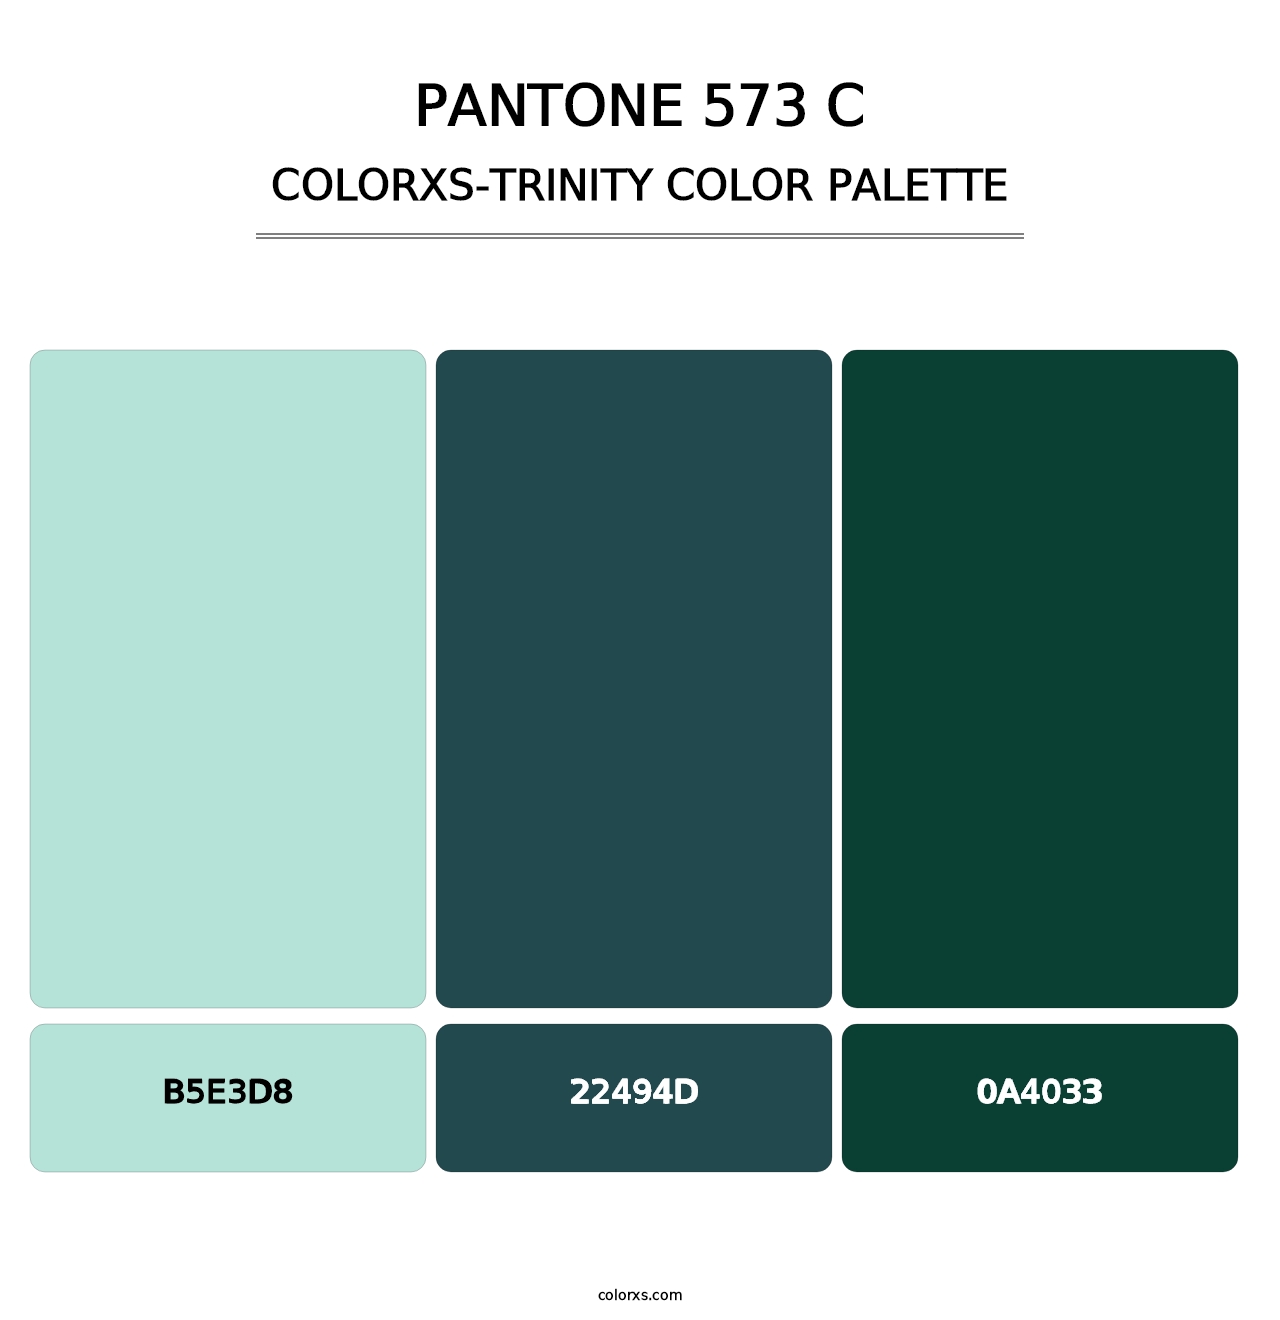 PANTONE 573 C - Colorxs Trinity Palette